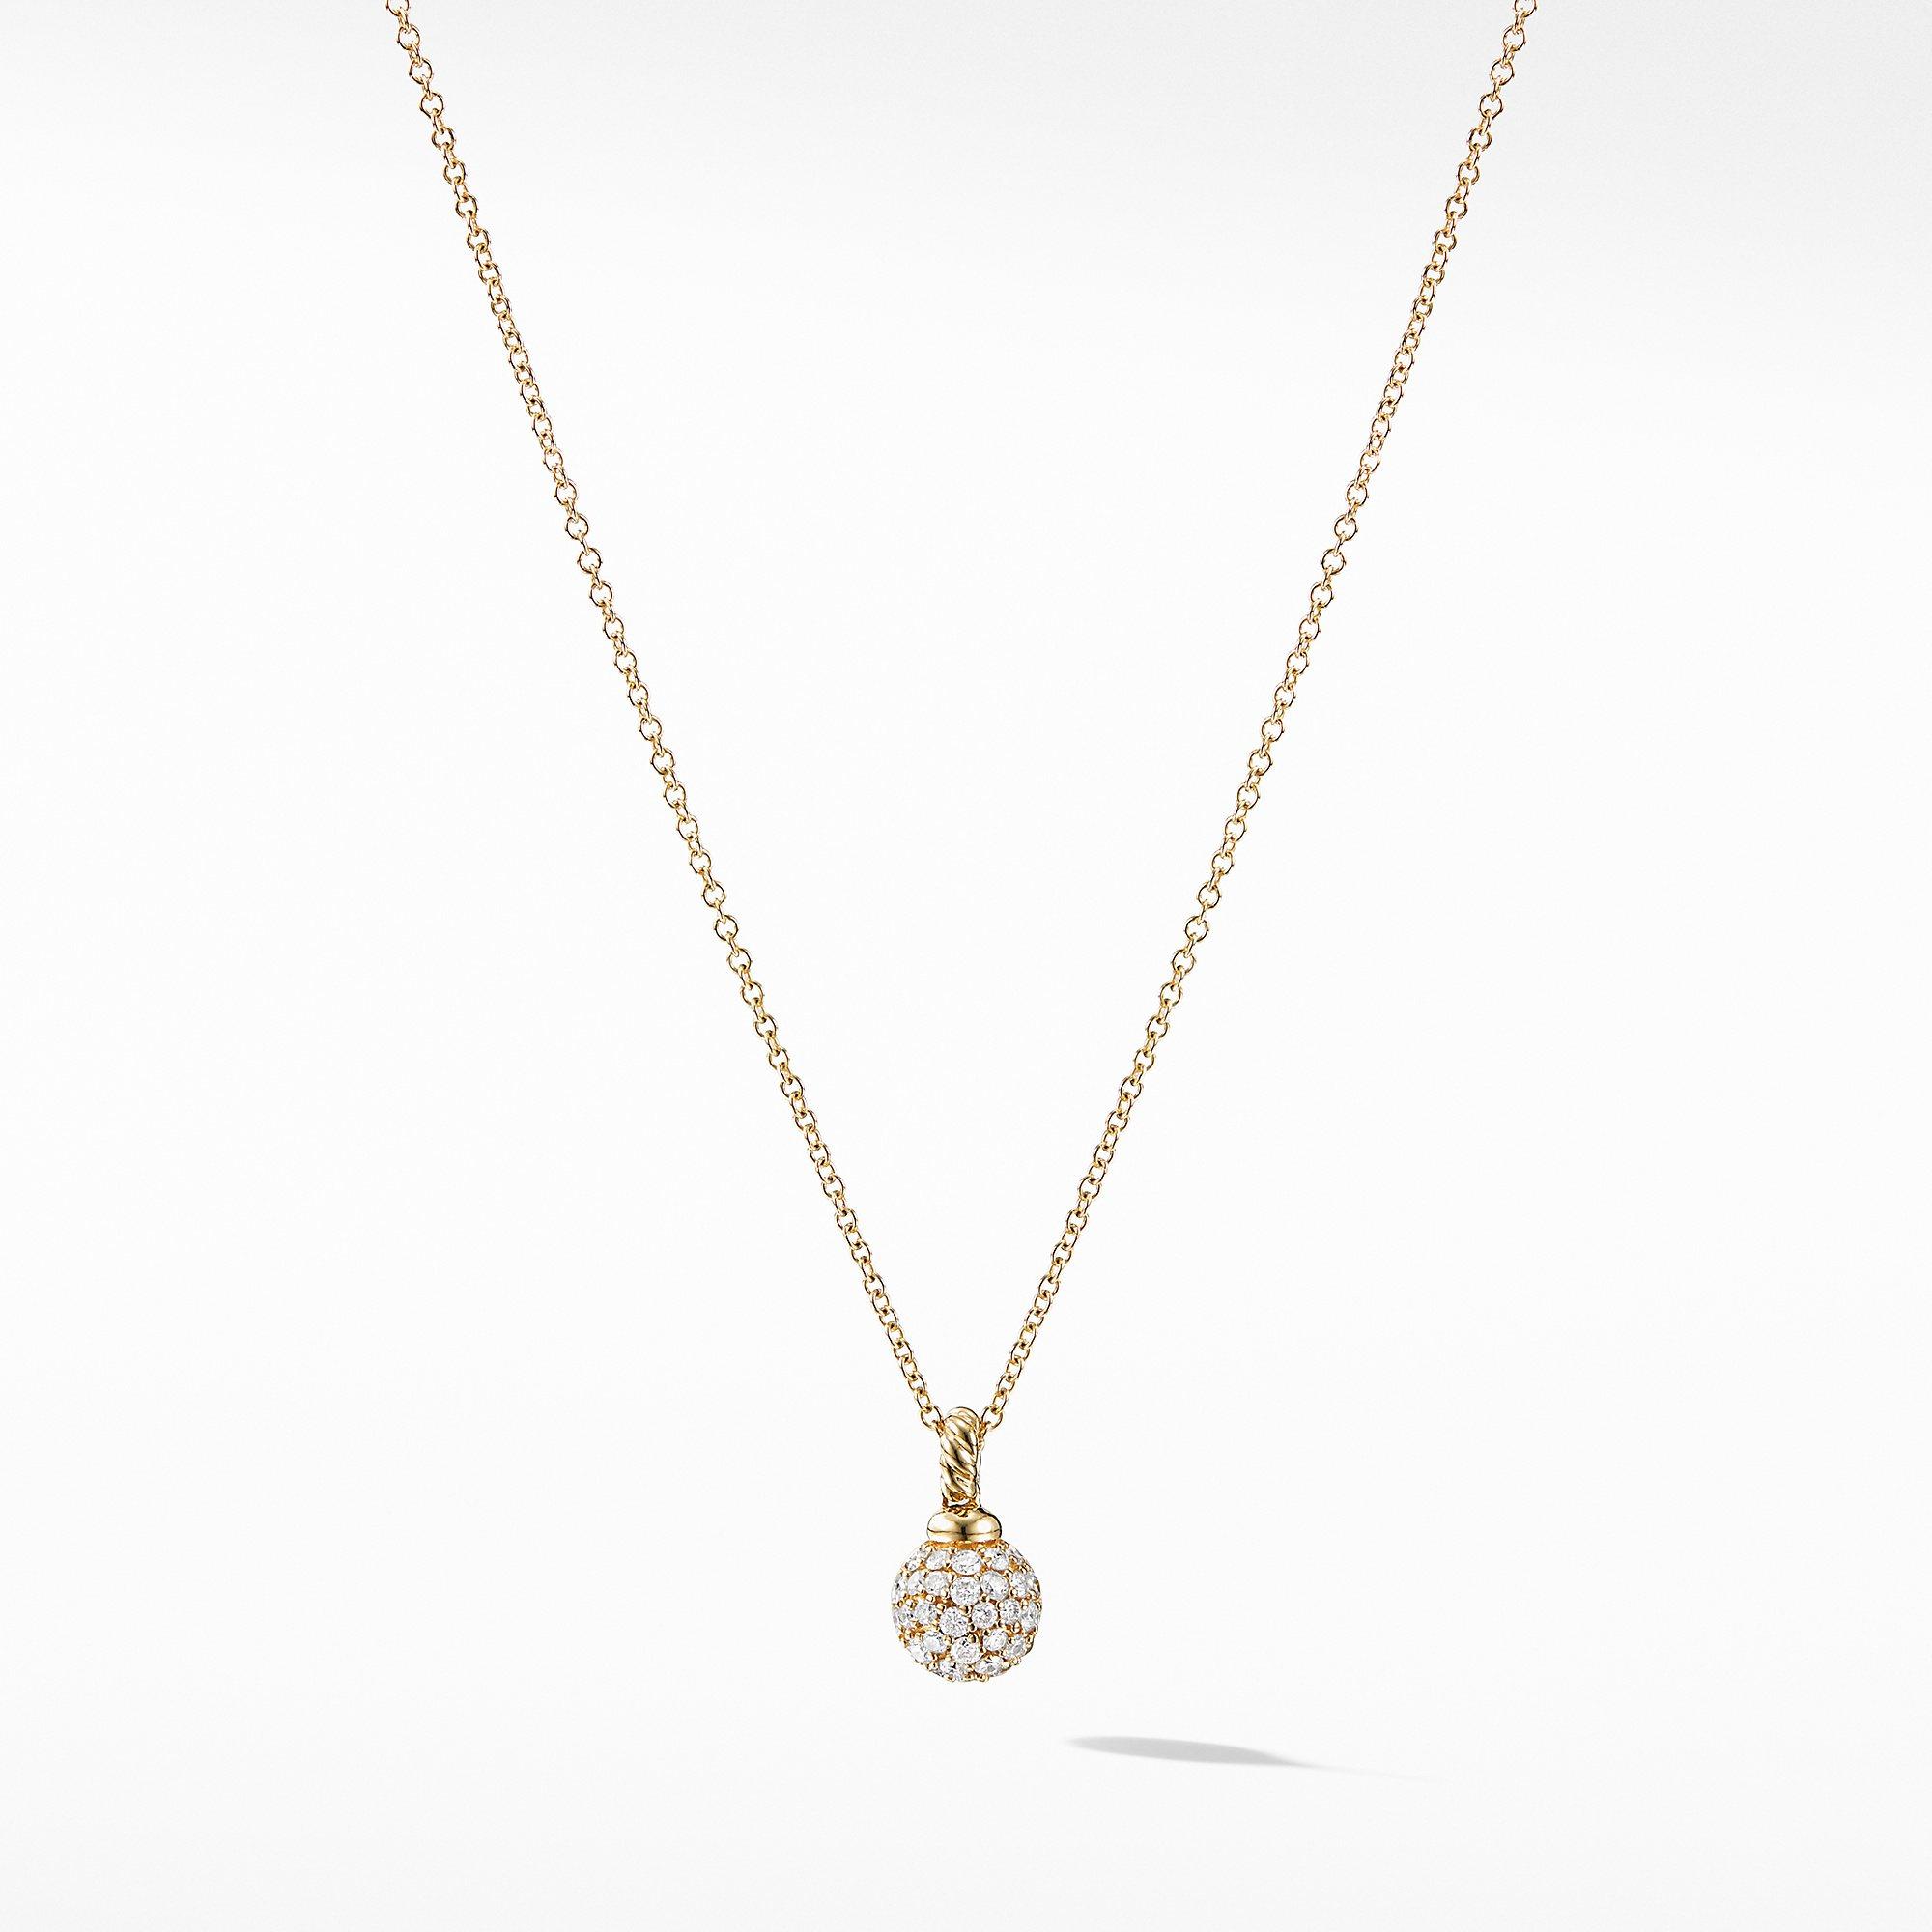 David Yurman Solari Pave Pendant Necklace with Diamonds in 18k Gold